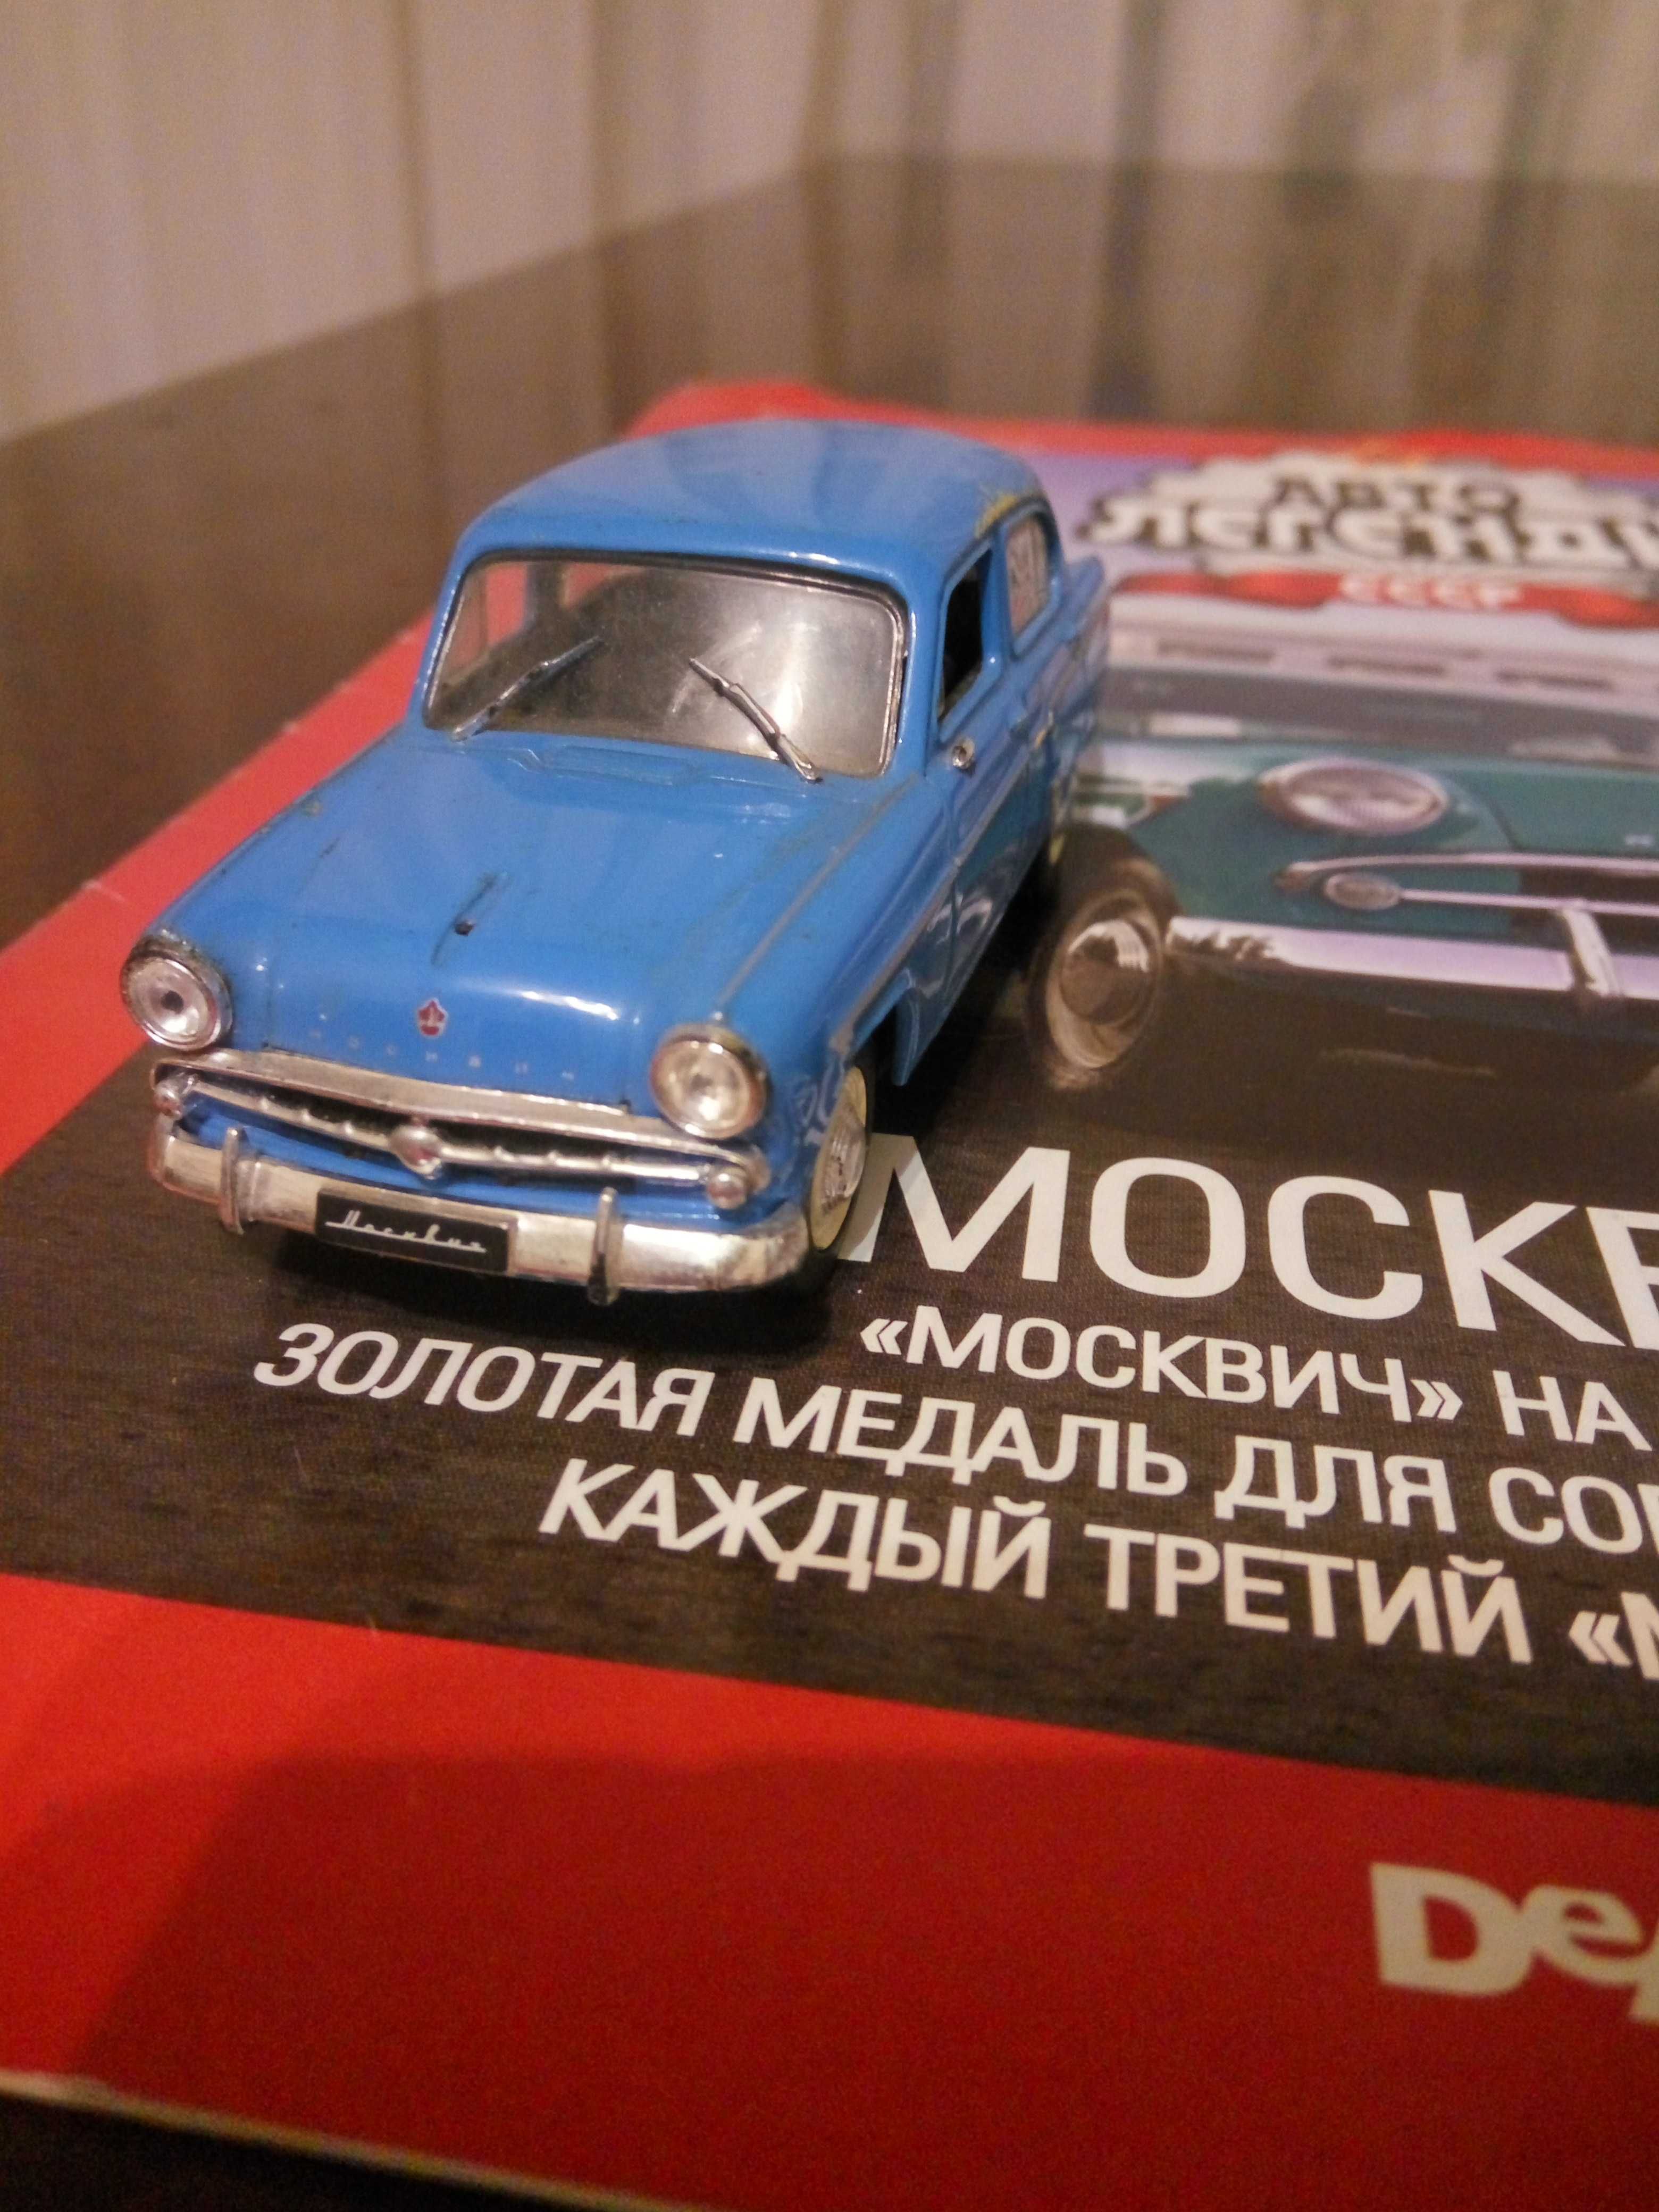 Модель 1.43 Москвич 407 deagostini.